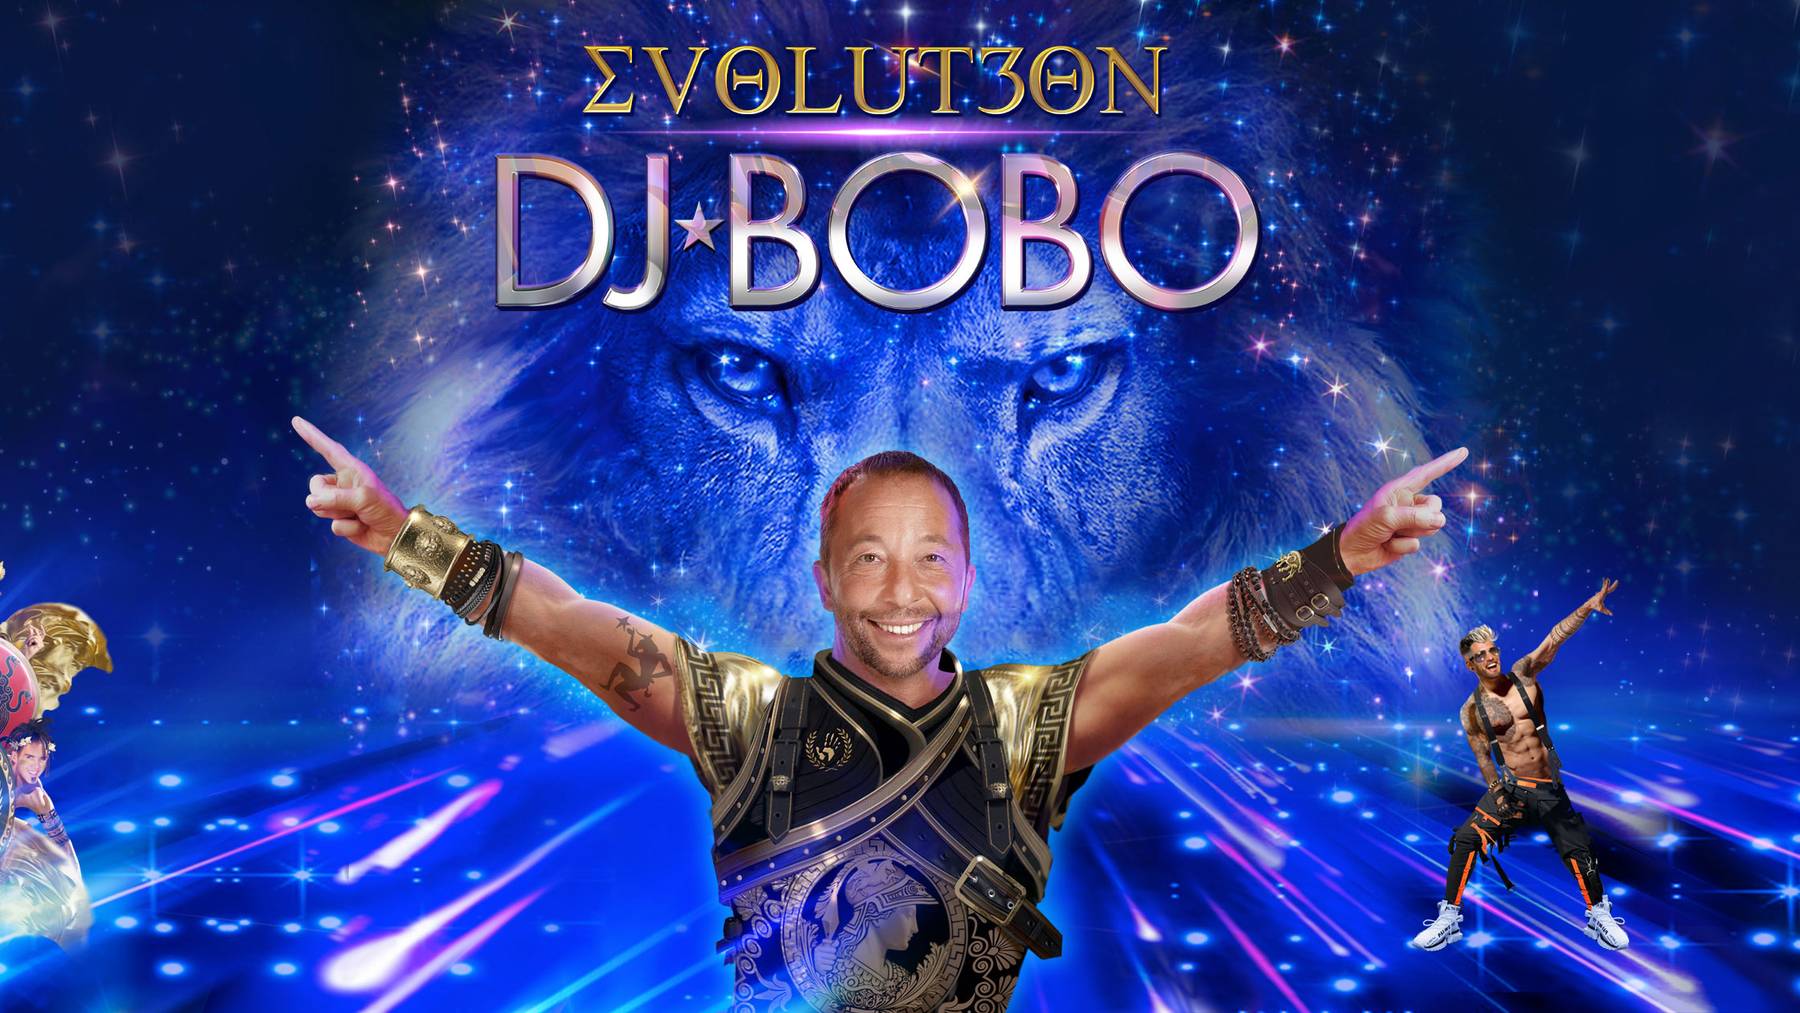 DJ Bobo Evolution